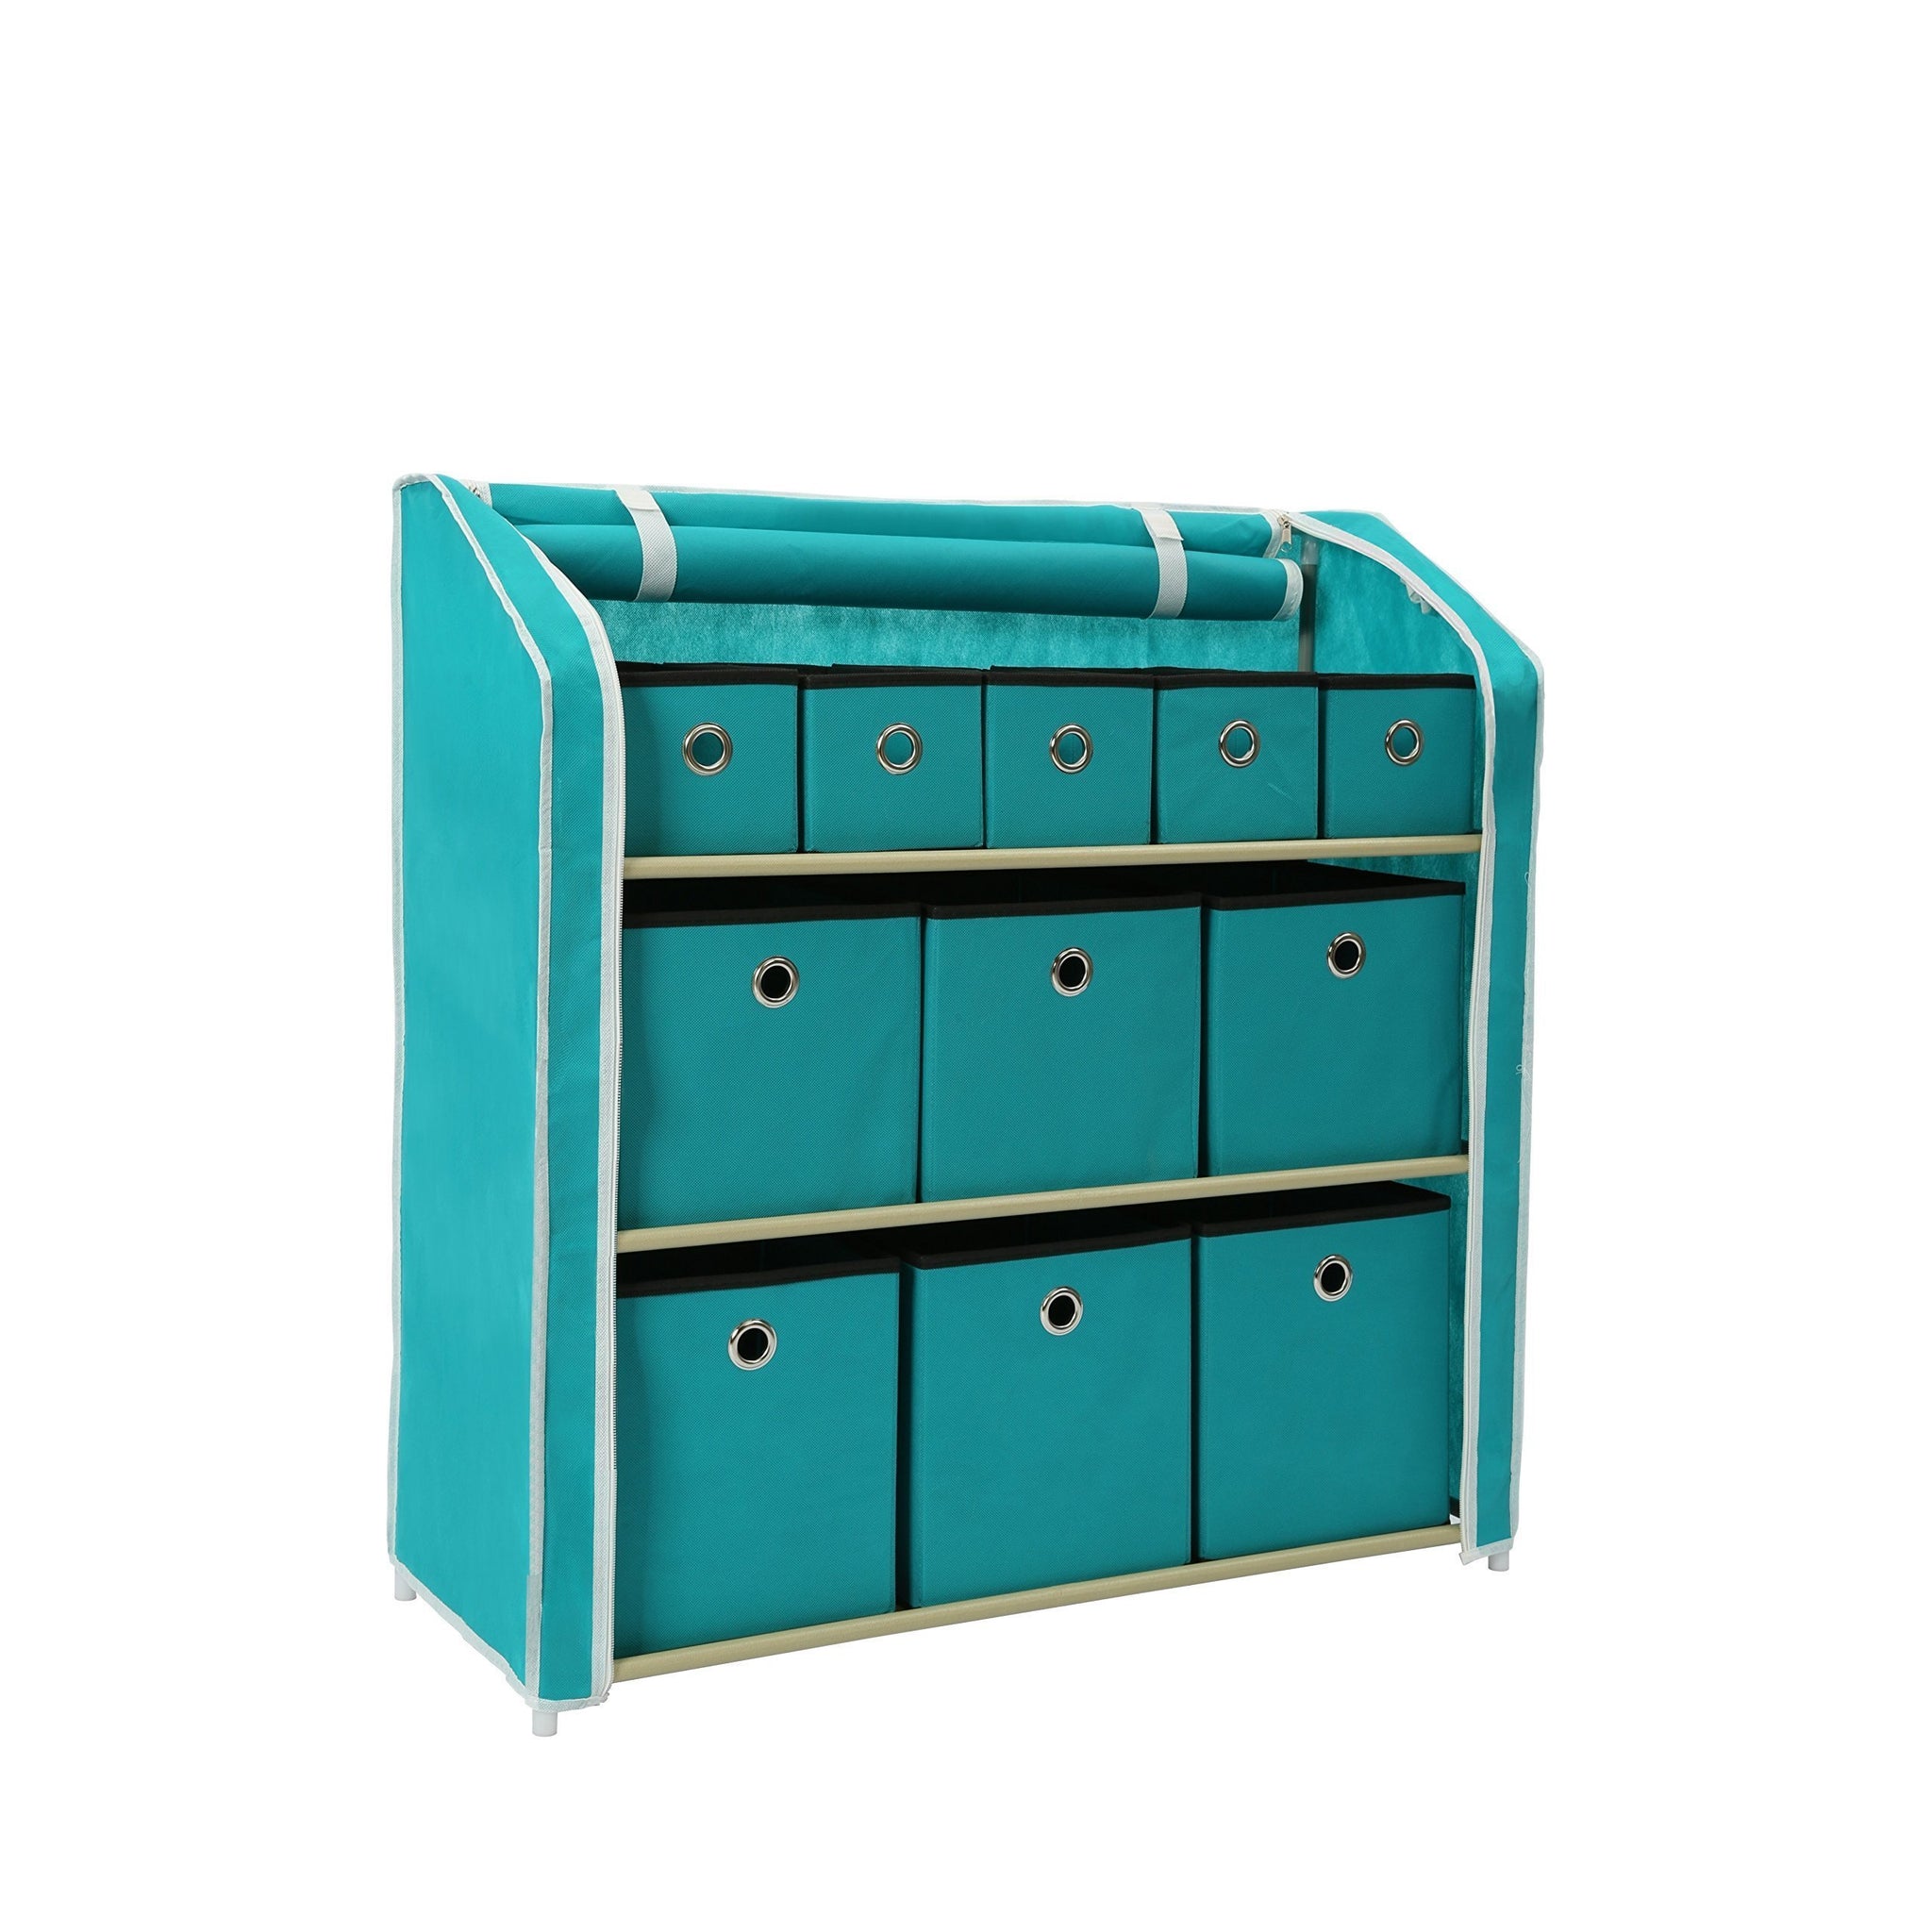 Kitchen homebi multi bin storage shelf 11 drawers storage chest linen organizer closet cabinet with zipper covered foldable fabric bins and sturdy metal shelf frame in turquoise 31w x12 dx32h